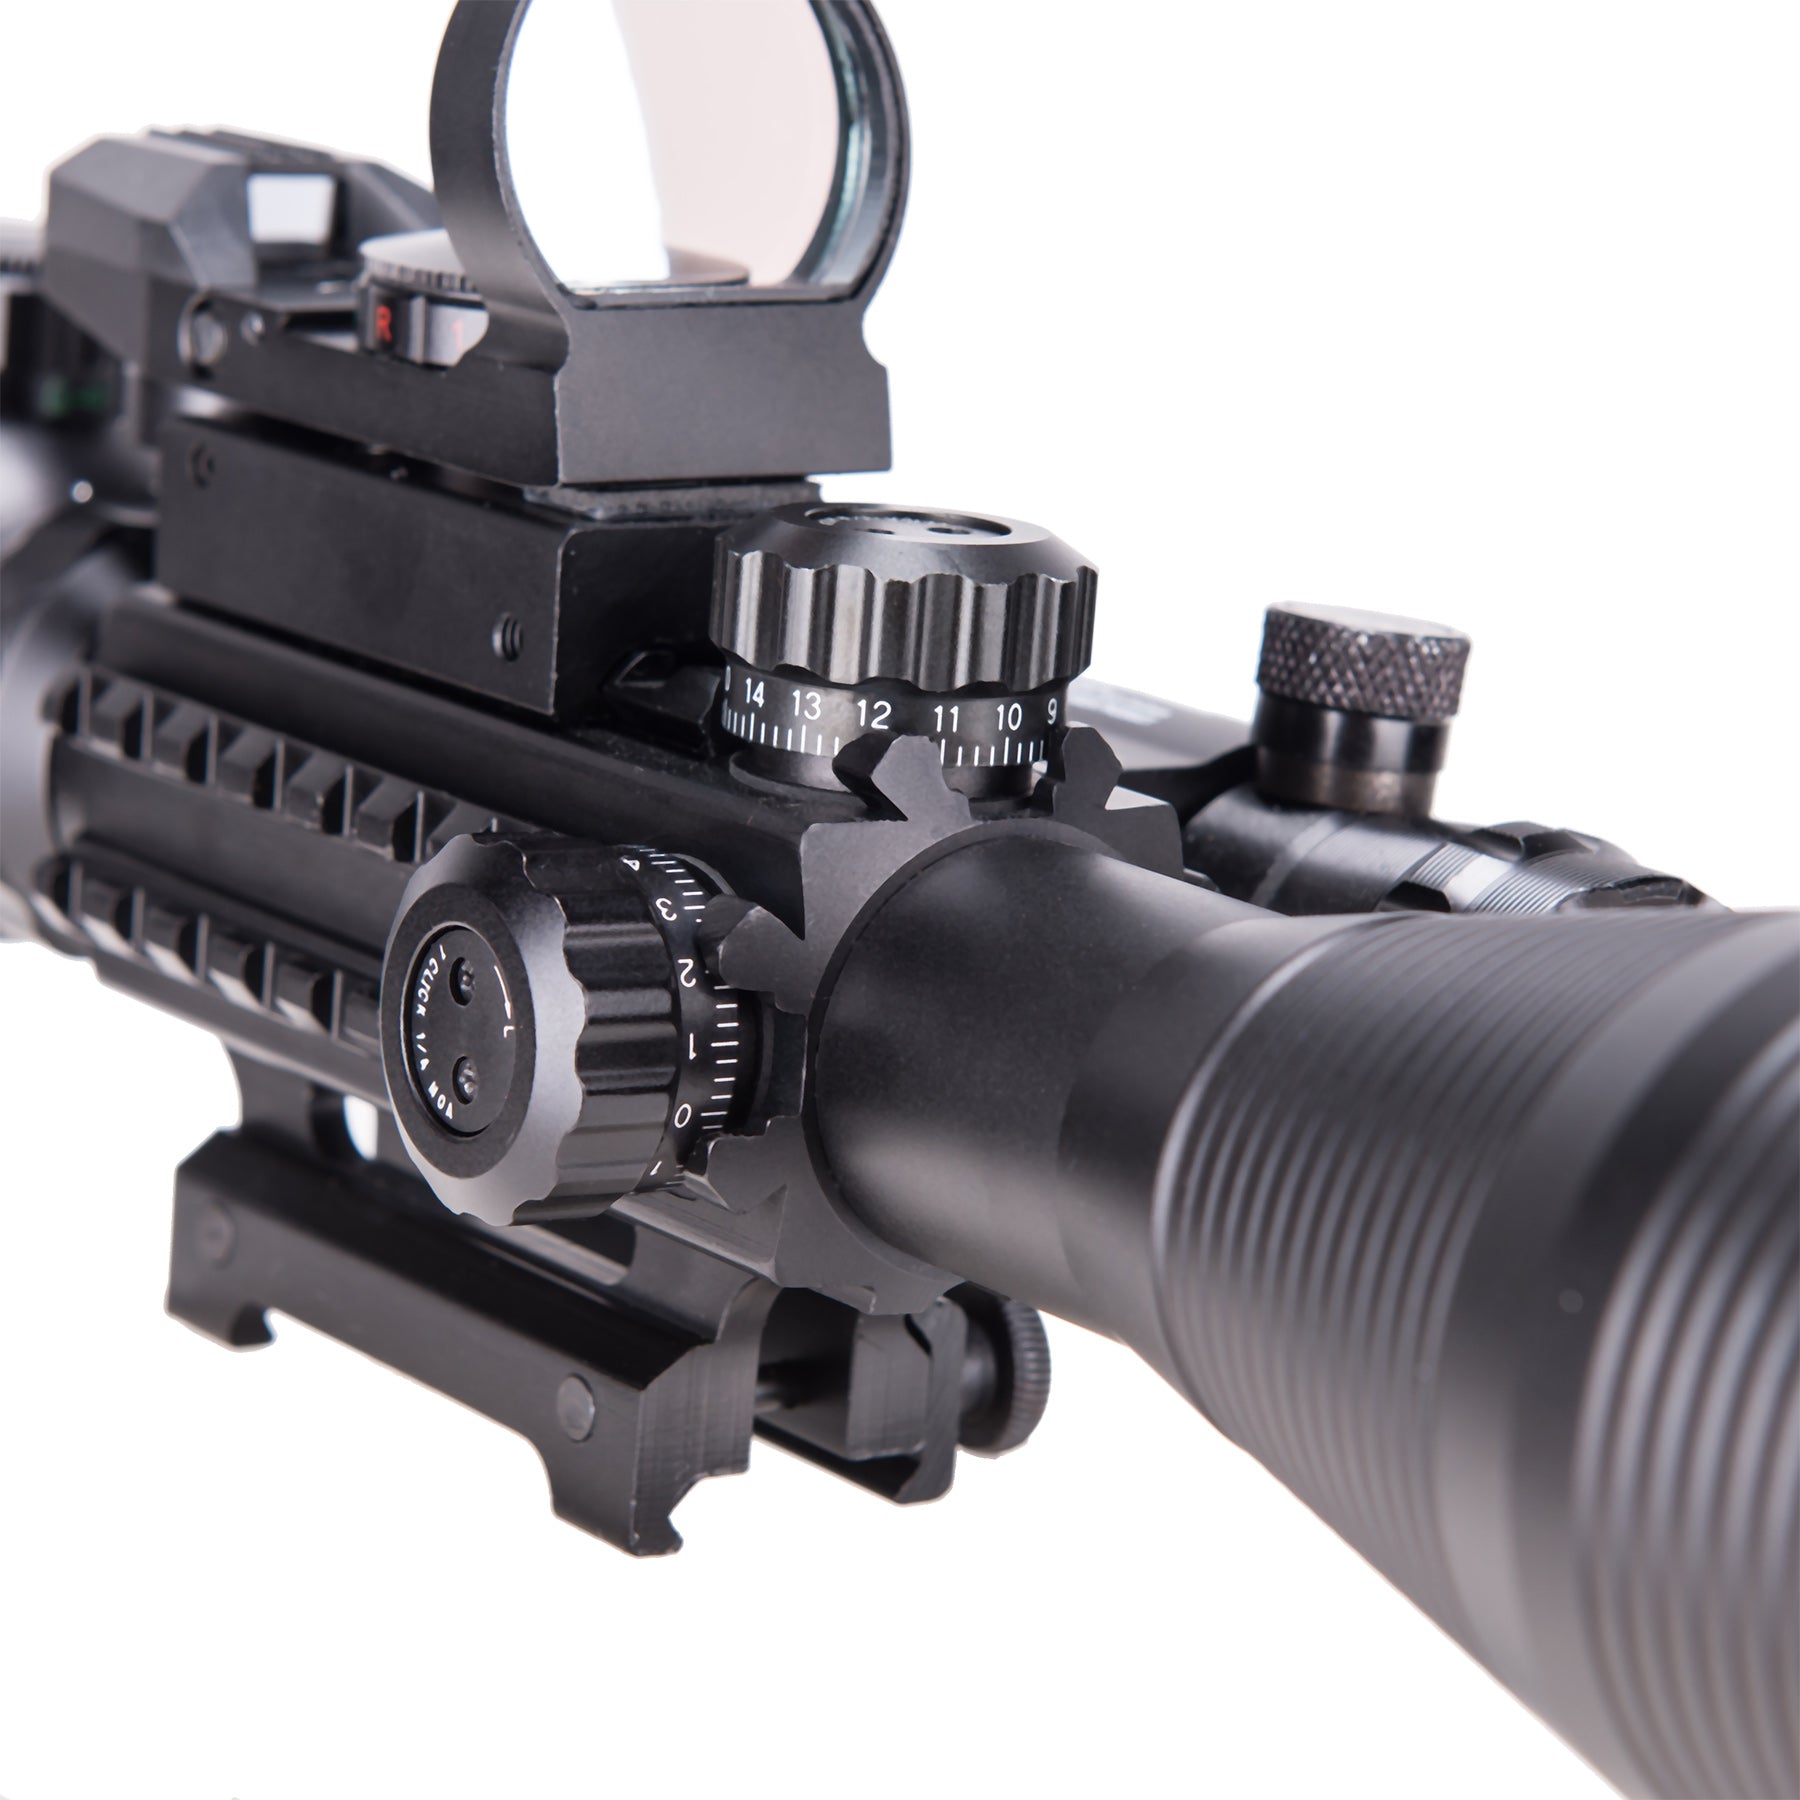 Pinty 3 in 1 Rifle Scope 4-12x50mm EG Rangefinder/Red&Green Reflex Sight/Green Dot Laser Sight-Comprehensive Low Light Vision